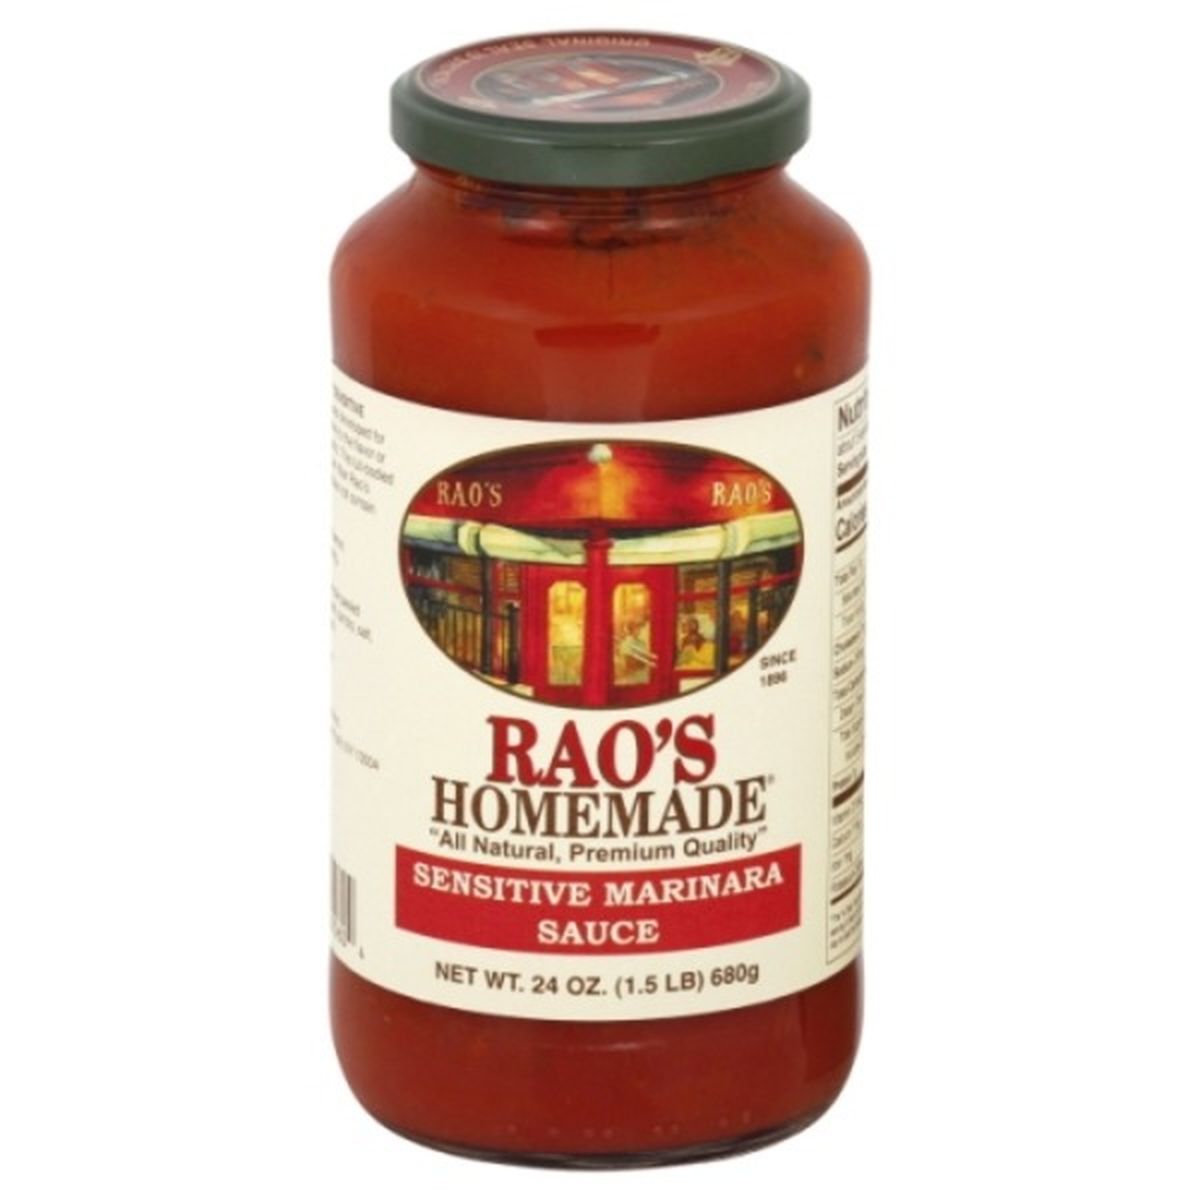 Calories in Rao's Homemade Homemade Marinara Sauce, Sensitive